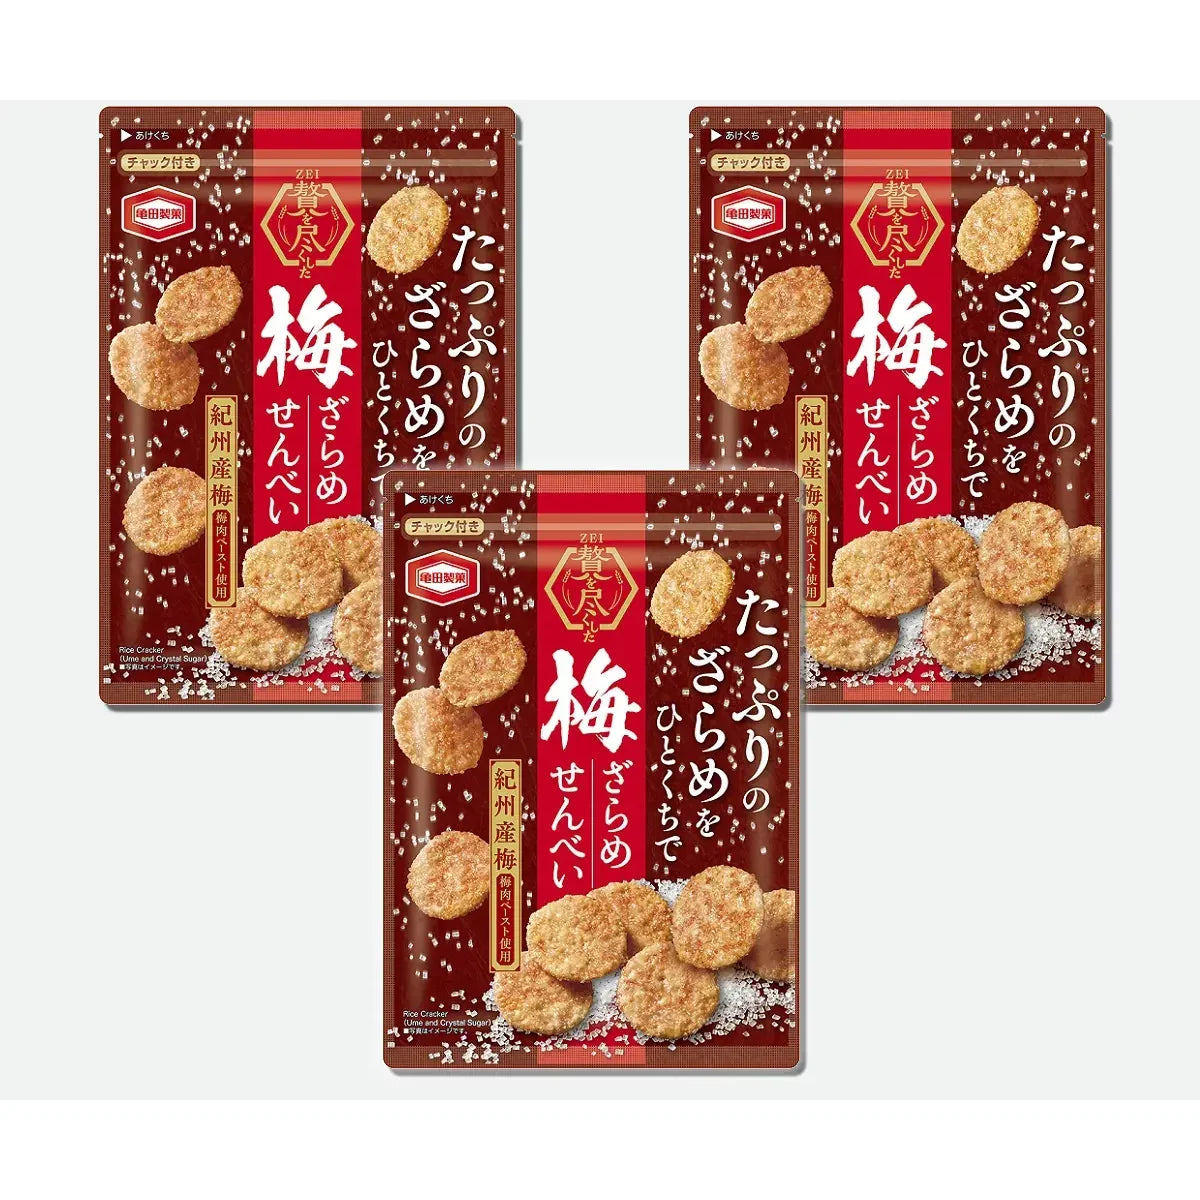 Kameda Ume Plum Zarame Senbei Crystal Sugar Baked Rice Crackers 90g (Pack of 3)